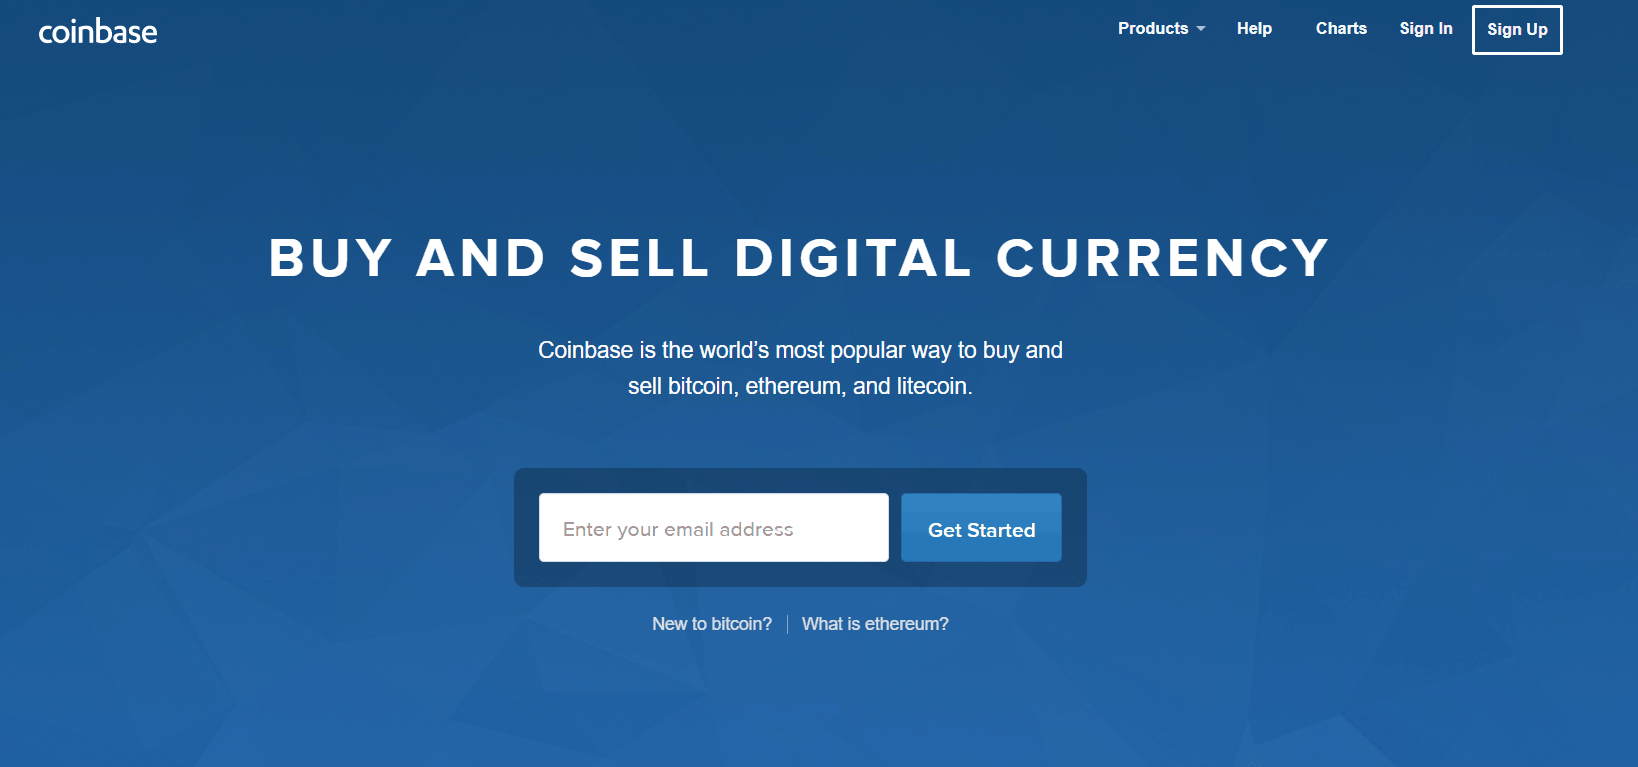 Coinbase homepage